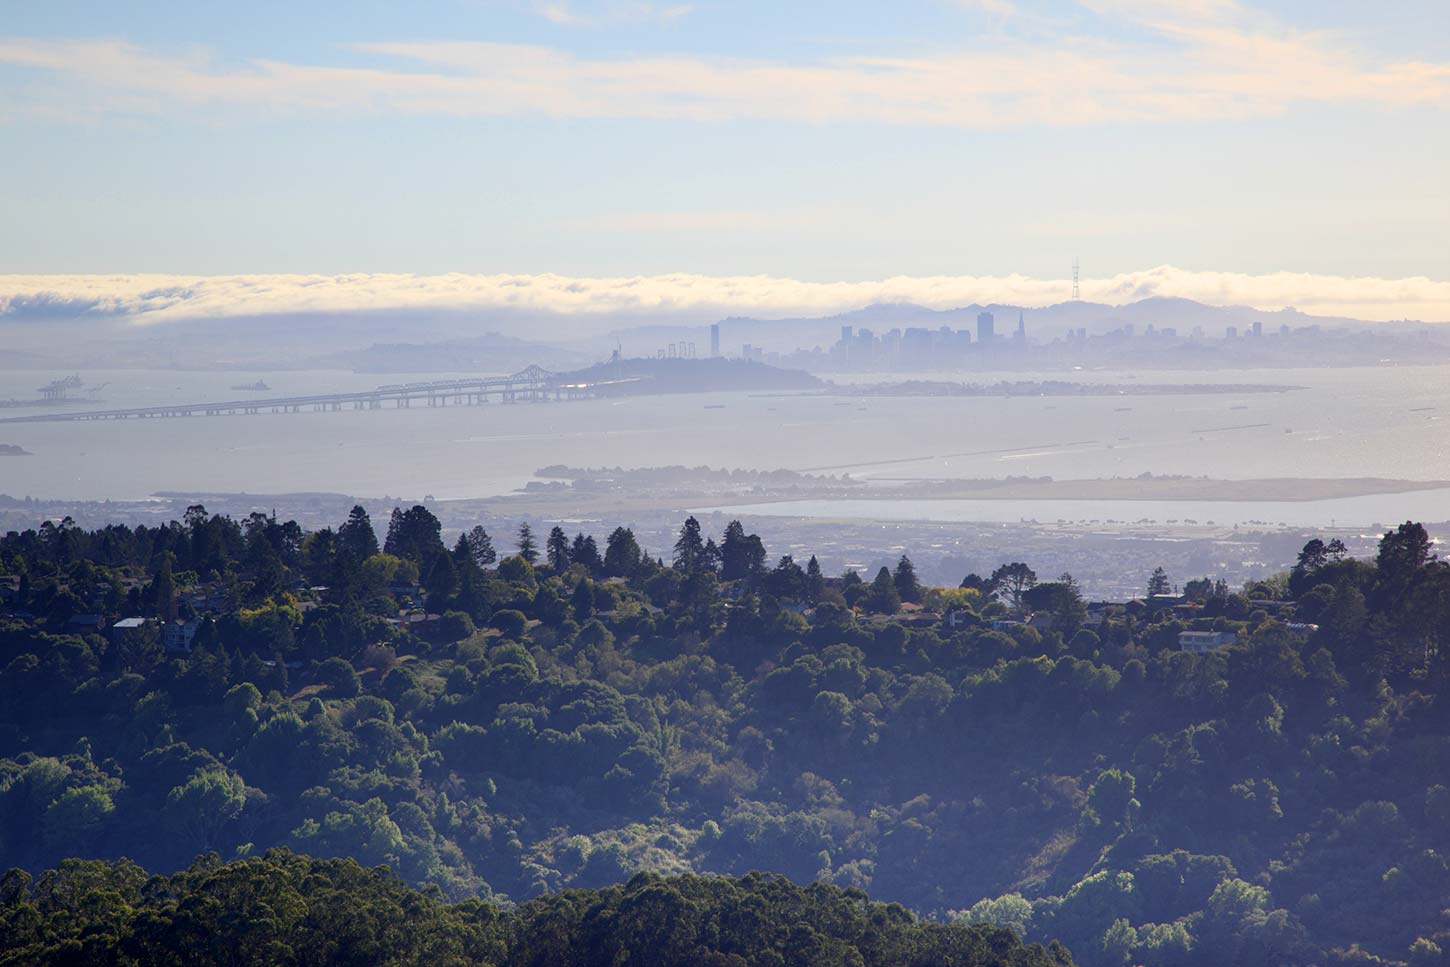 View of San Francisco from Wild Cat Peak, a hiking destination near Oakland, California. 